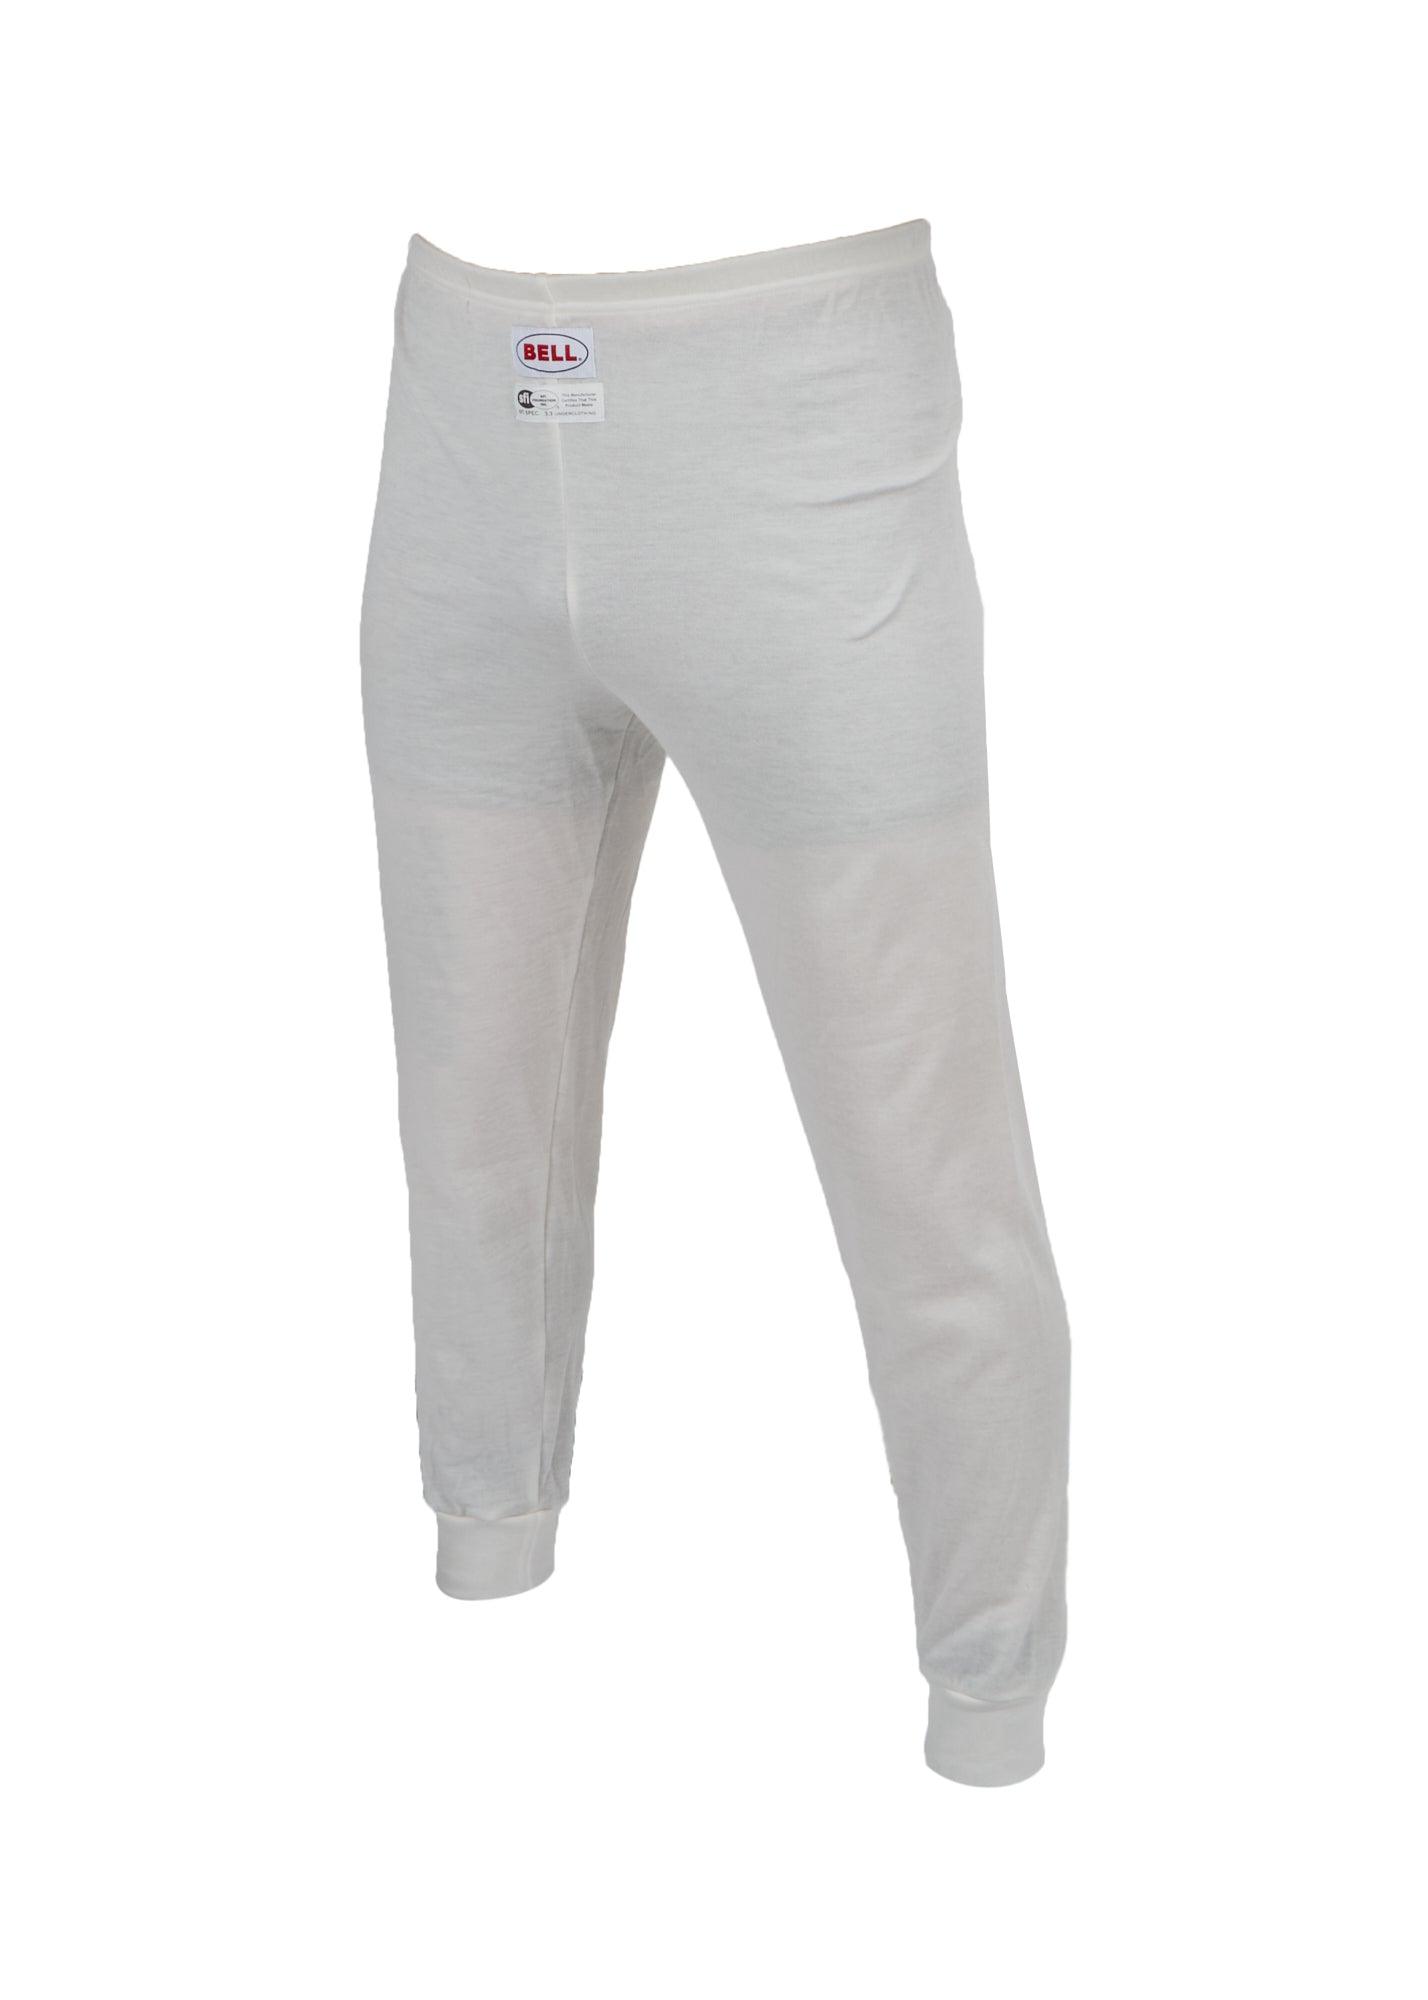 Underwear Bottom SPORT- TX White XL SFI 3.3/5 - Burlile Performance Products